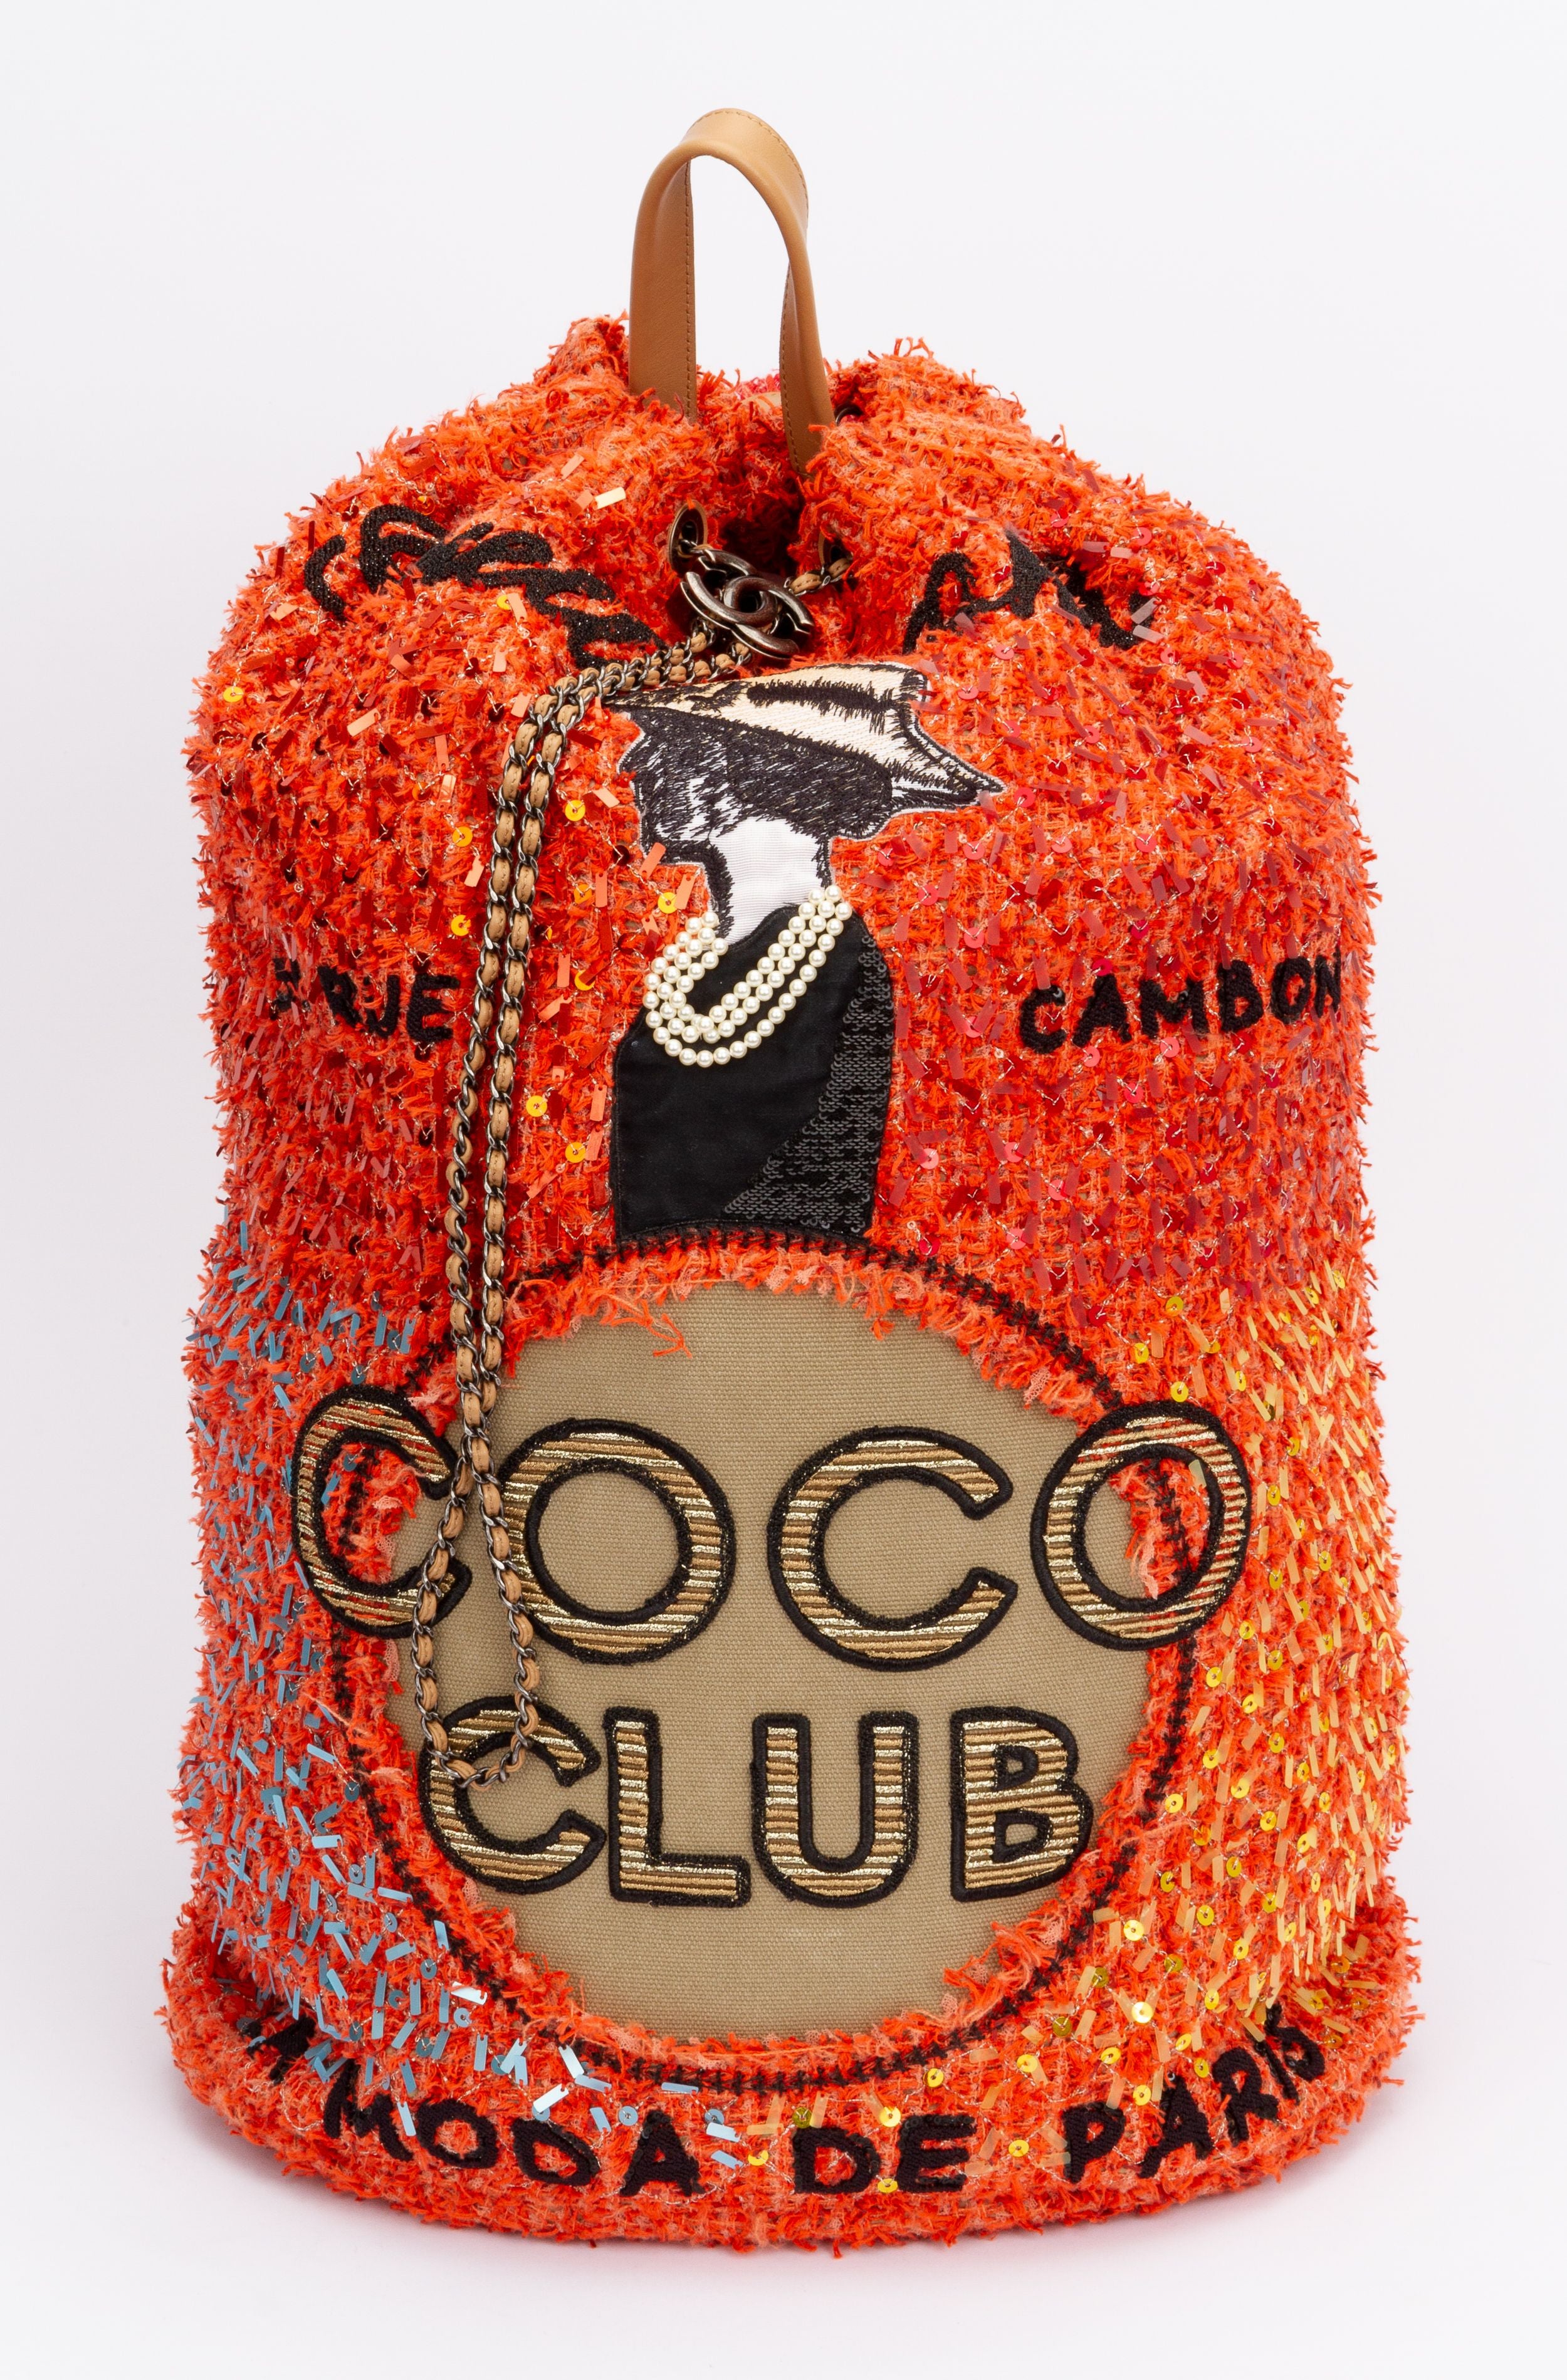 Chanel Coco Cuba – The Brand Collector